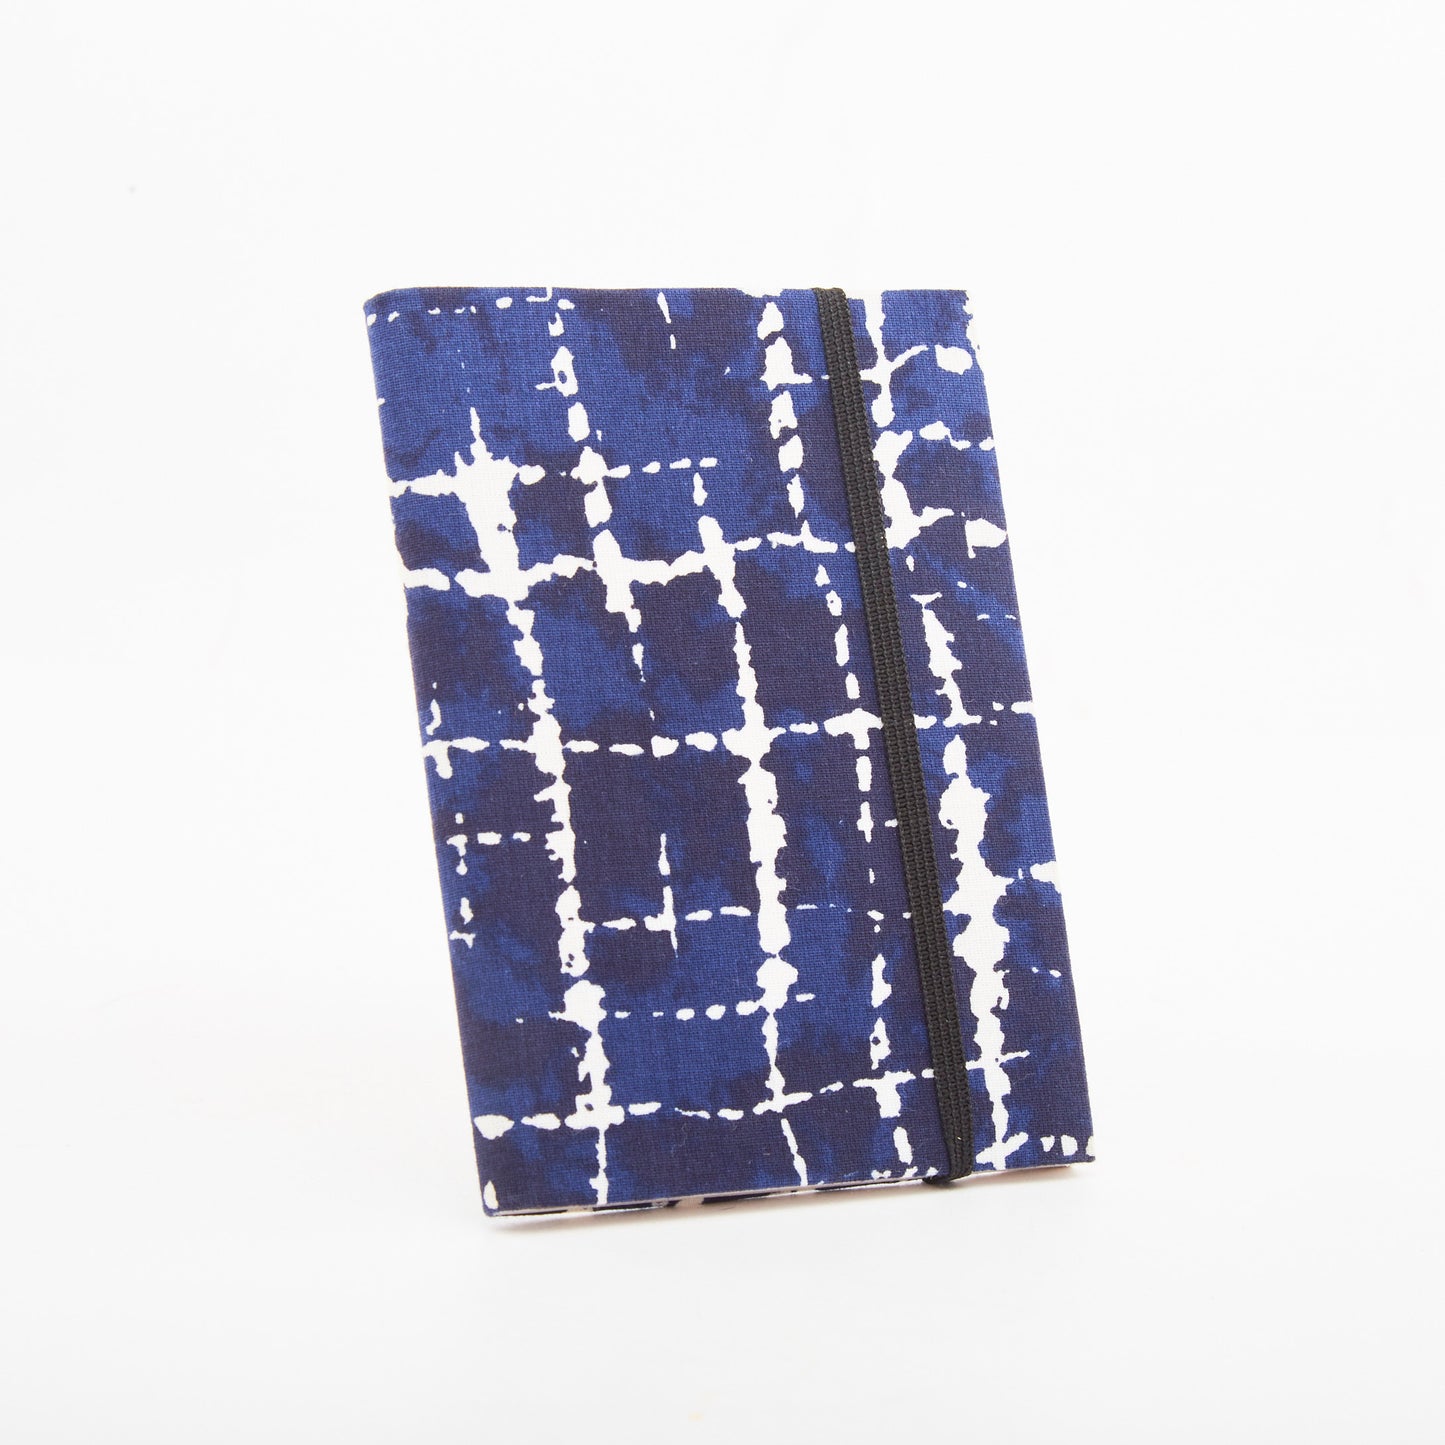 Block Print on a Denim Blue - Cloth Diary